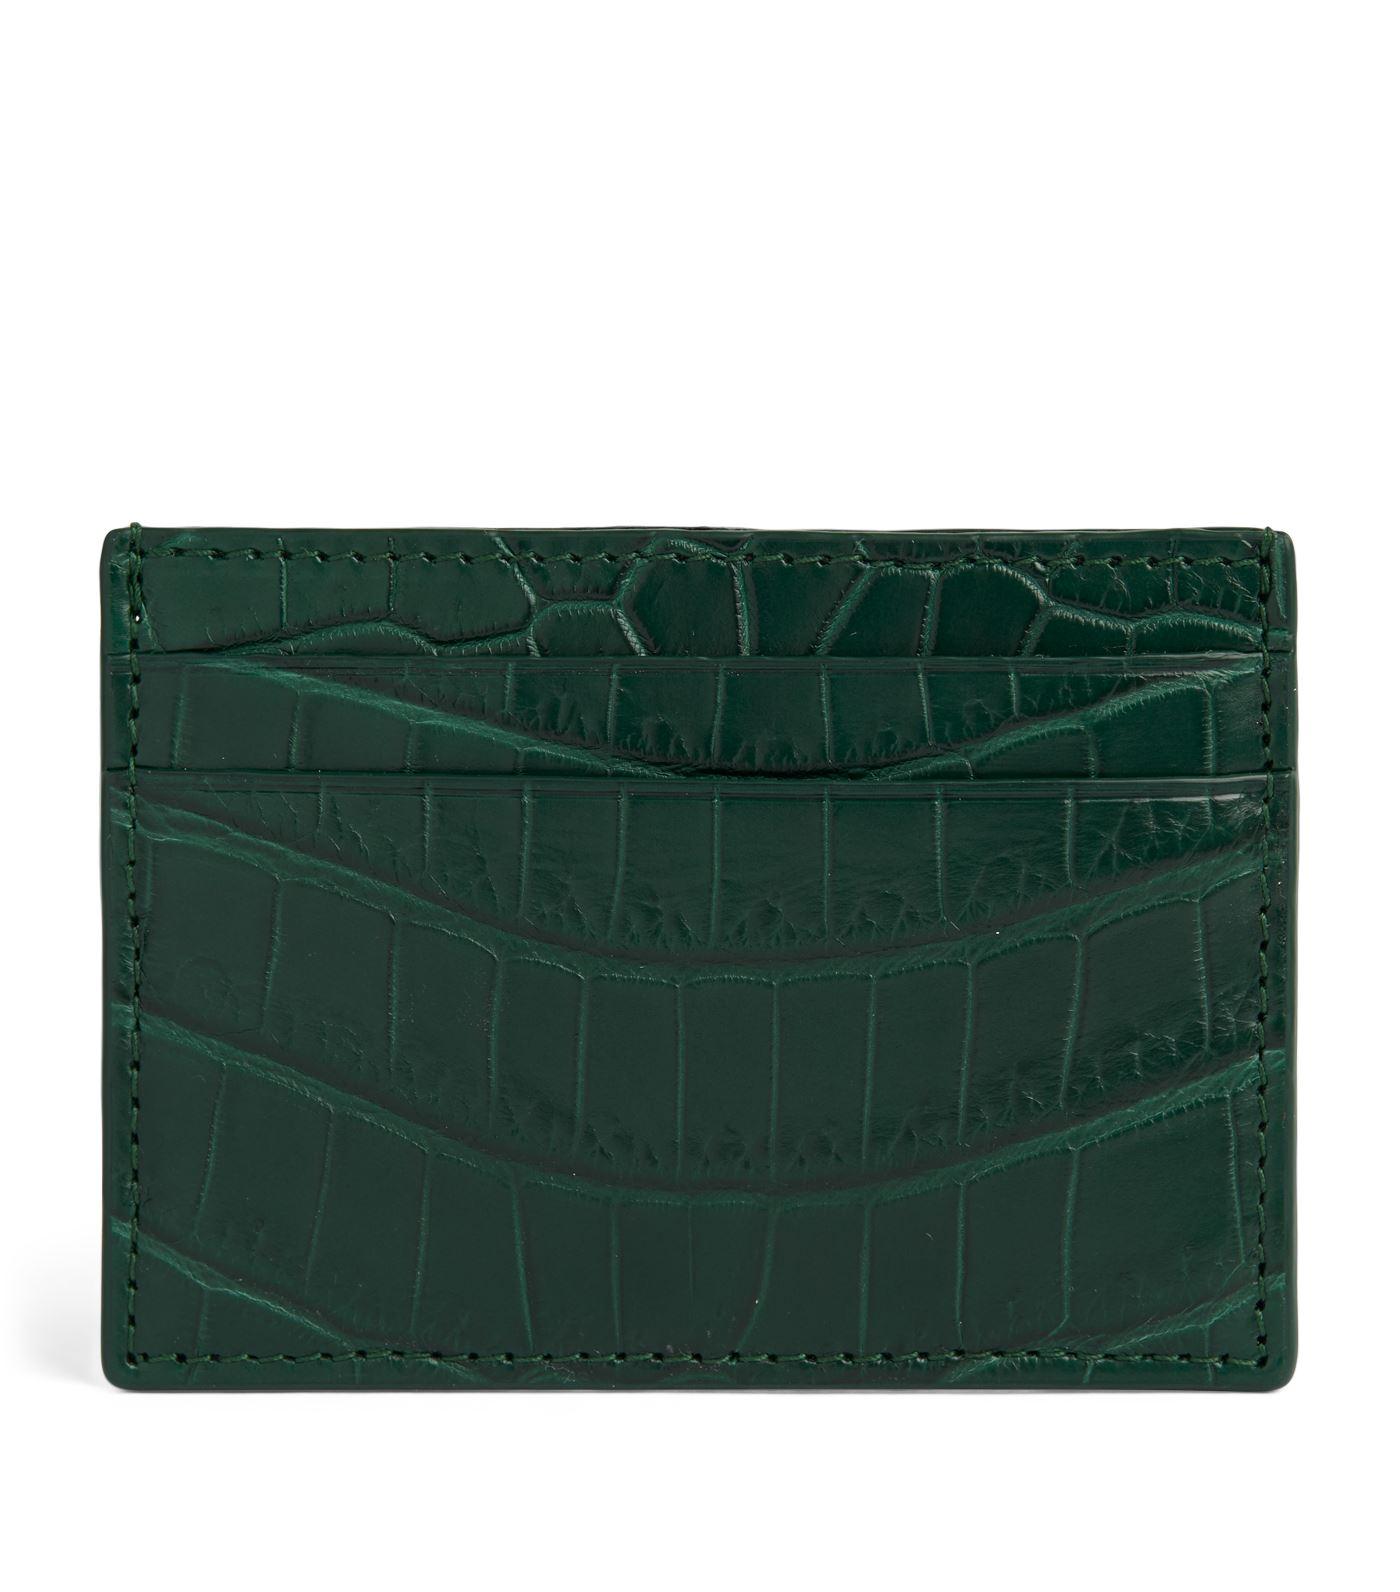 Bottega Veneta Crocodile Leather Card Holder in Green for Men